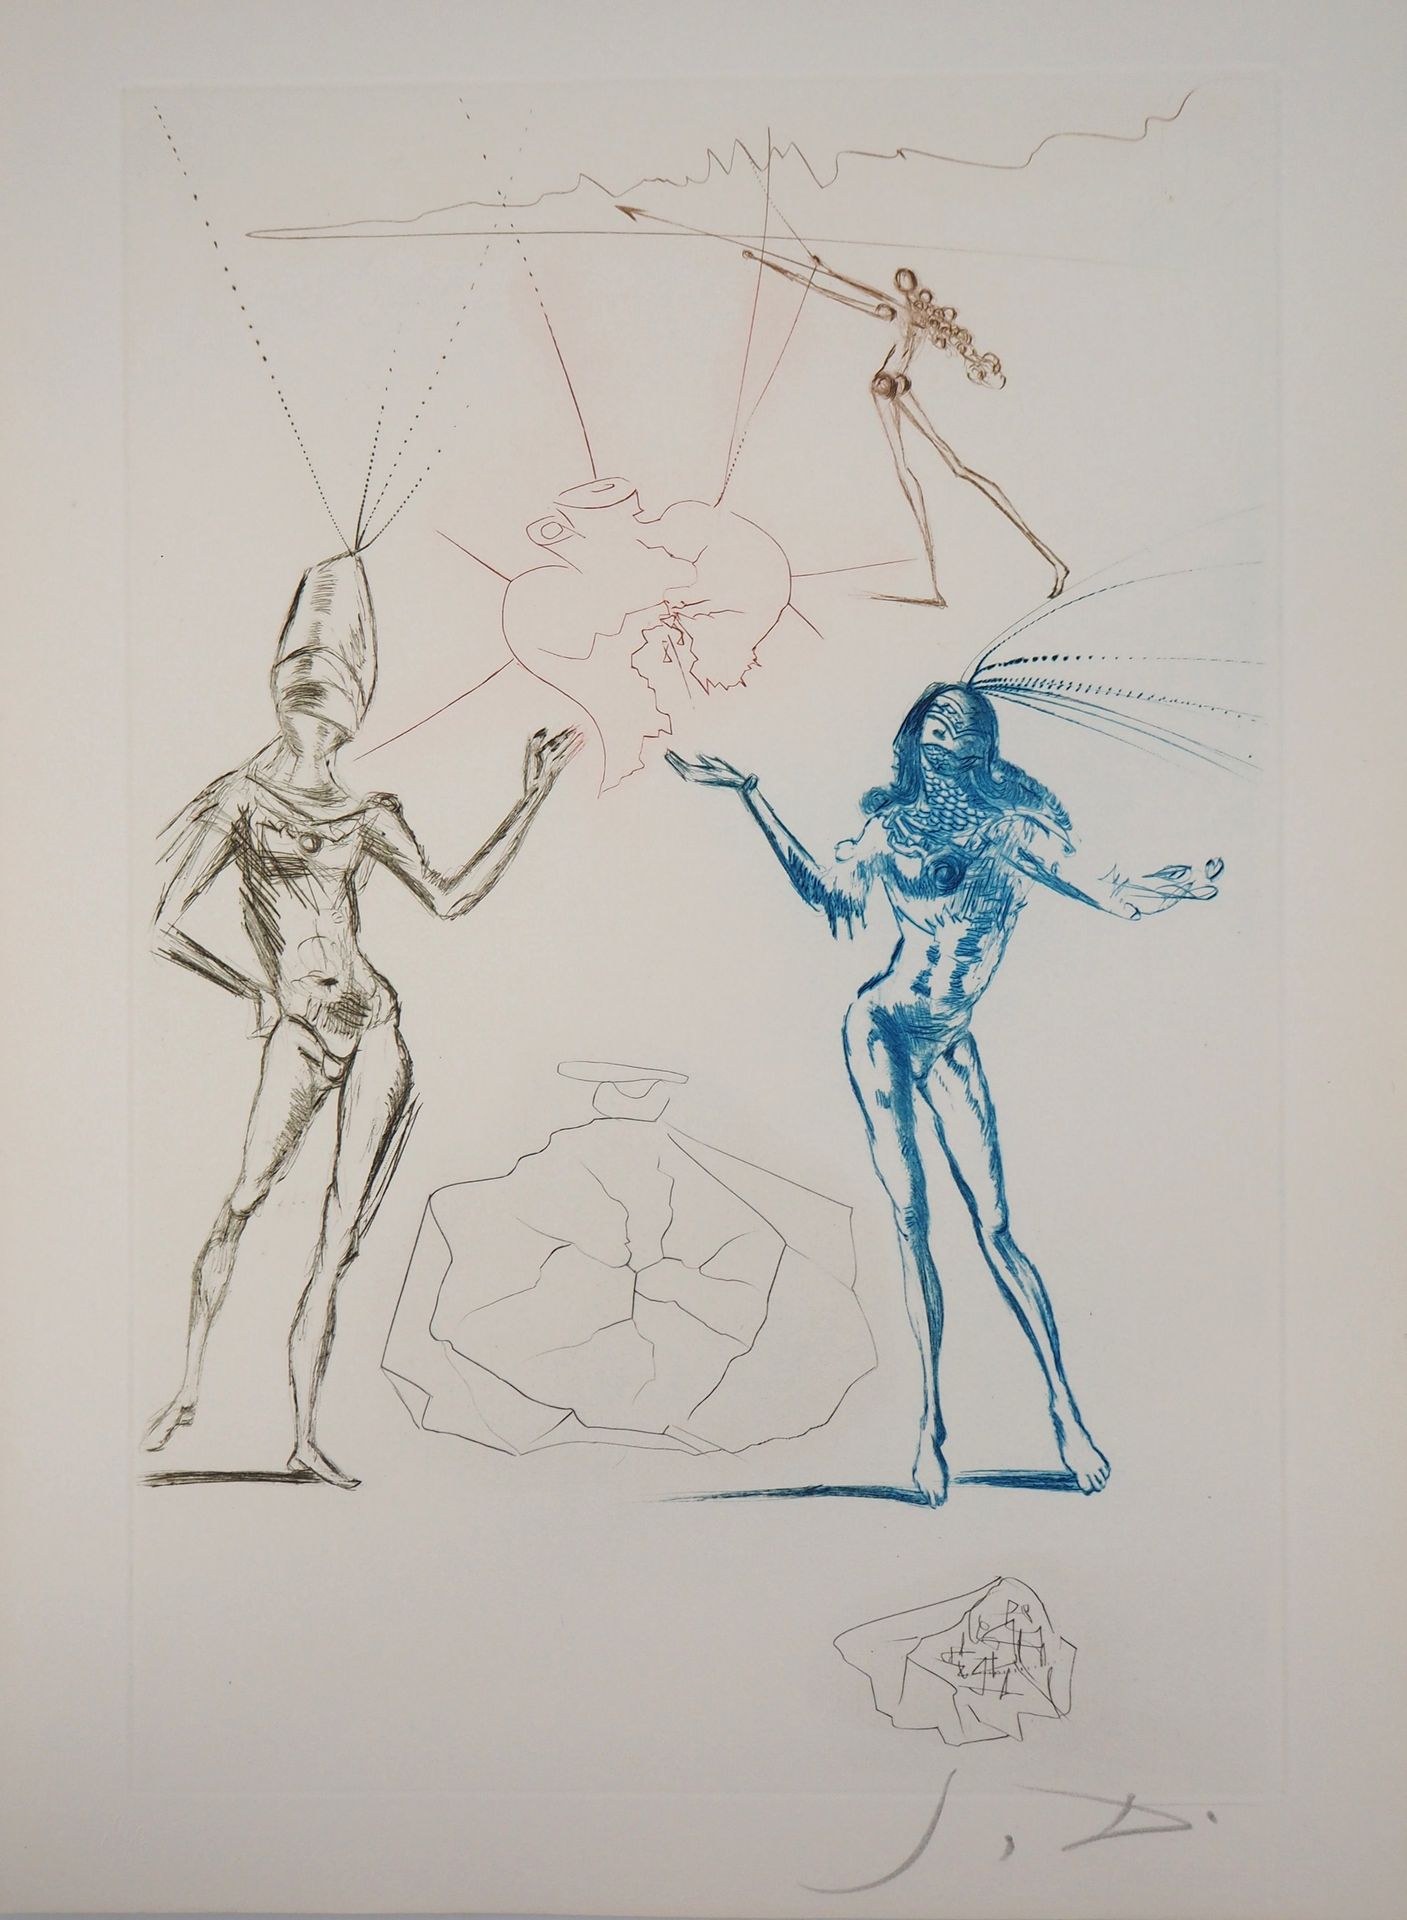 Salvador DALI Salvador DALI

心爱的人，1970年



原始彩色蚀刻画（蚀刻画）

右下角有铅笔签名和艺术家的字样

纸张左下方有&hellip;